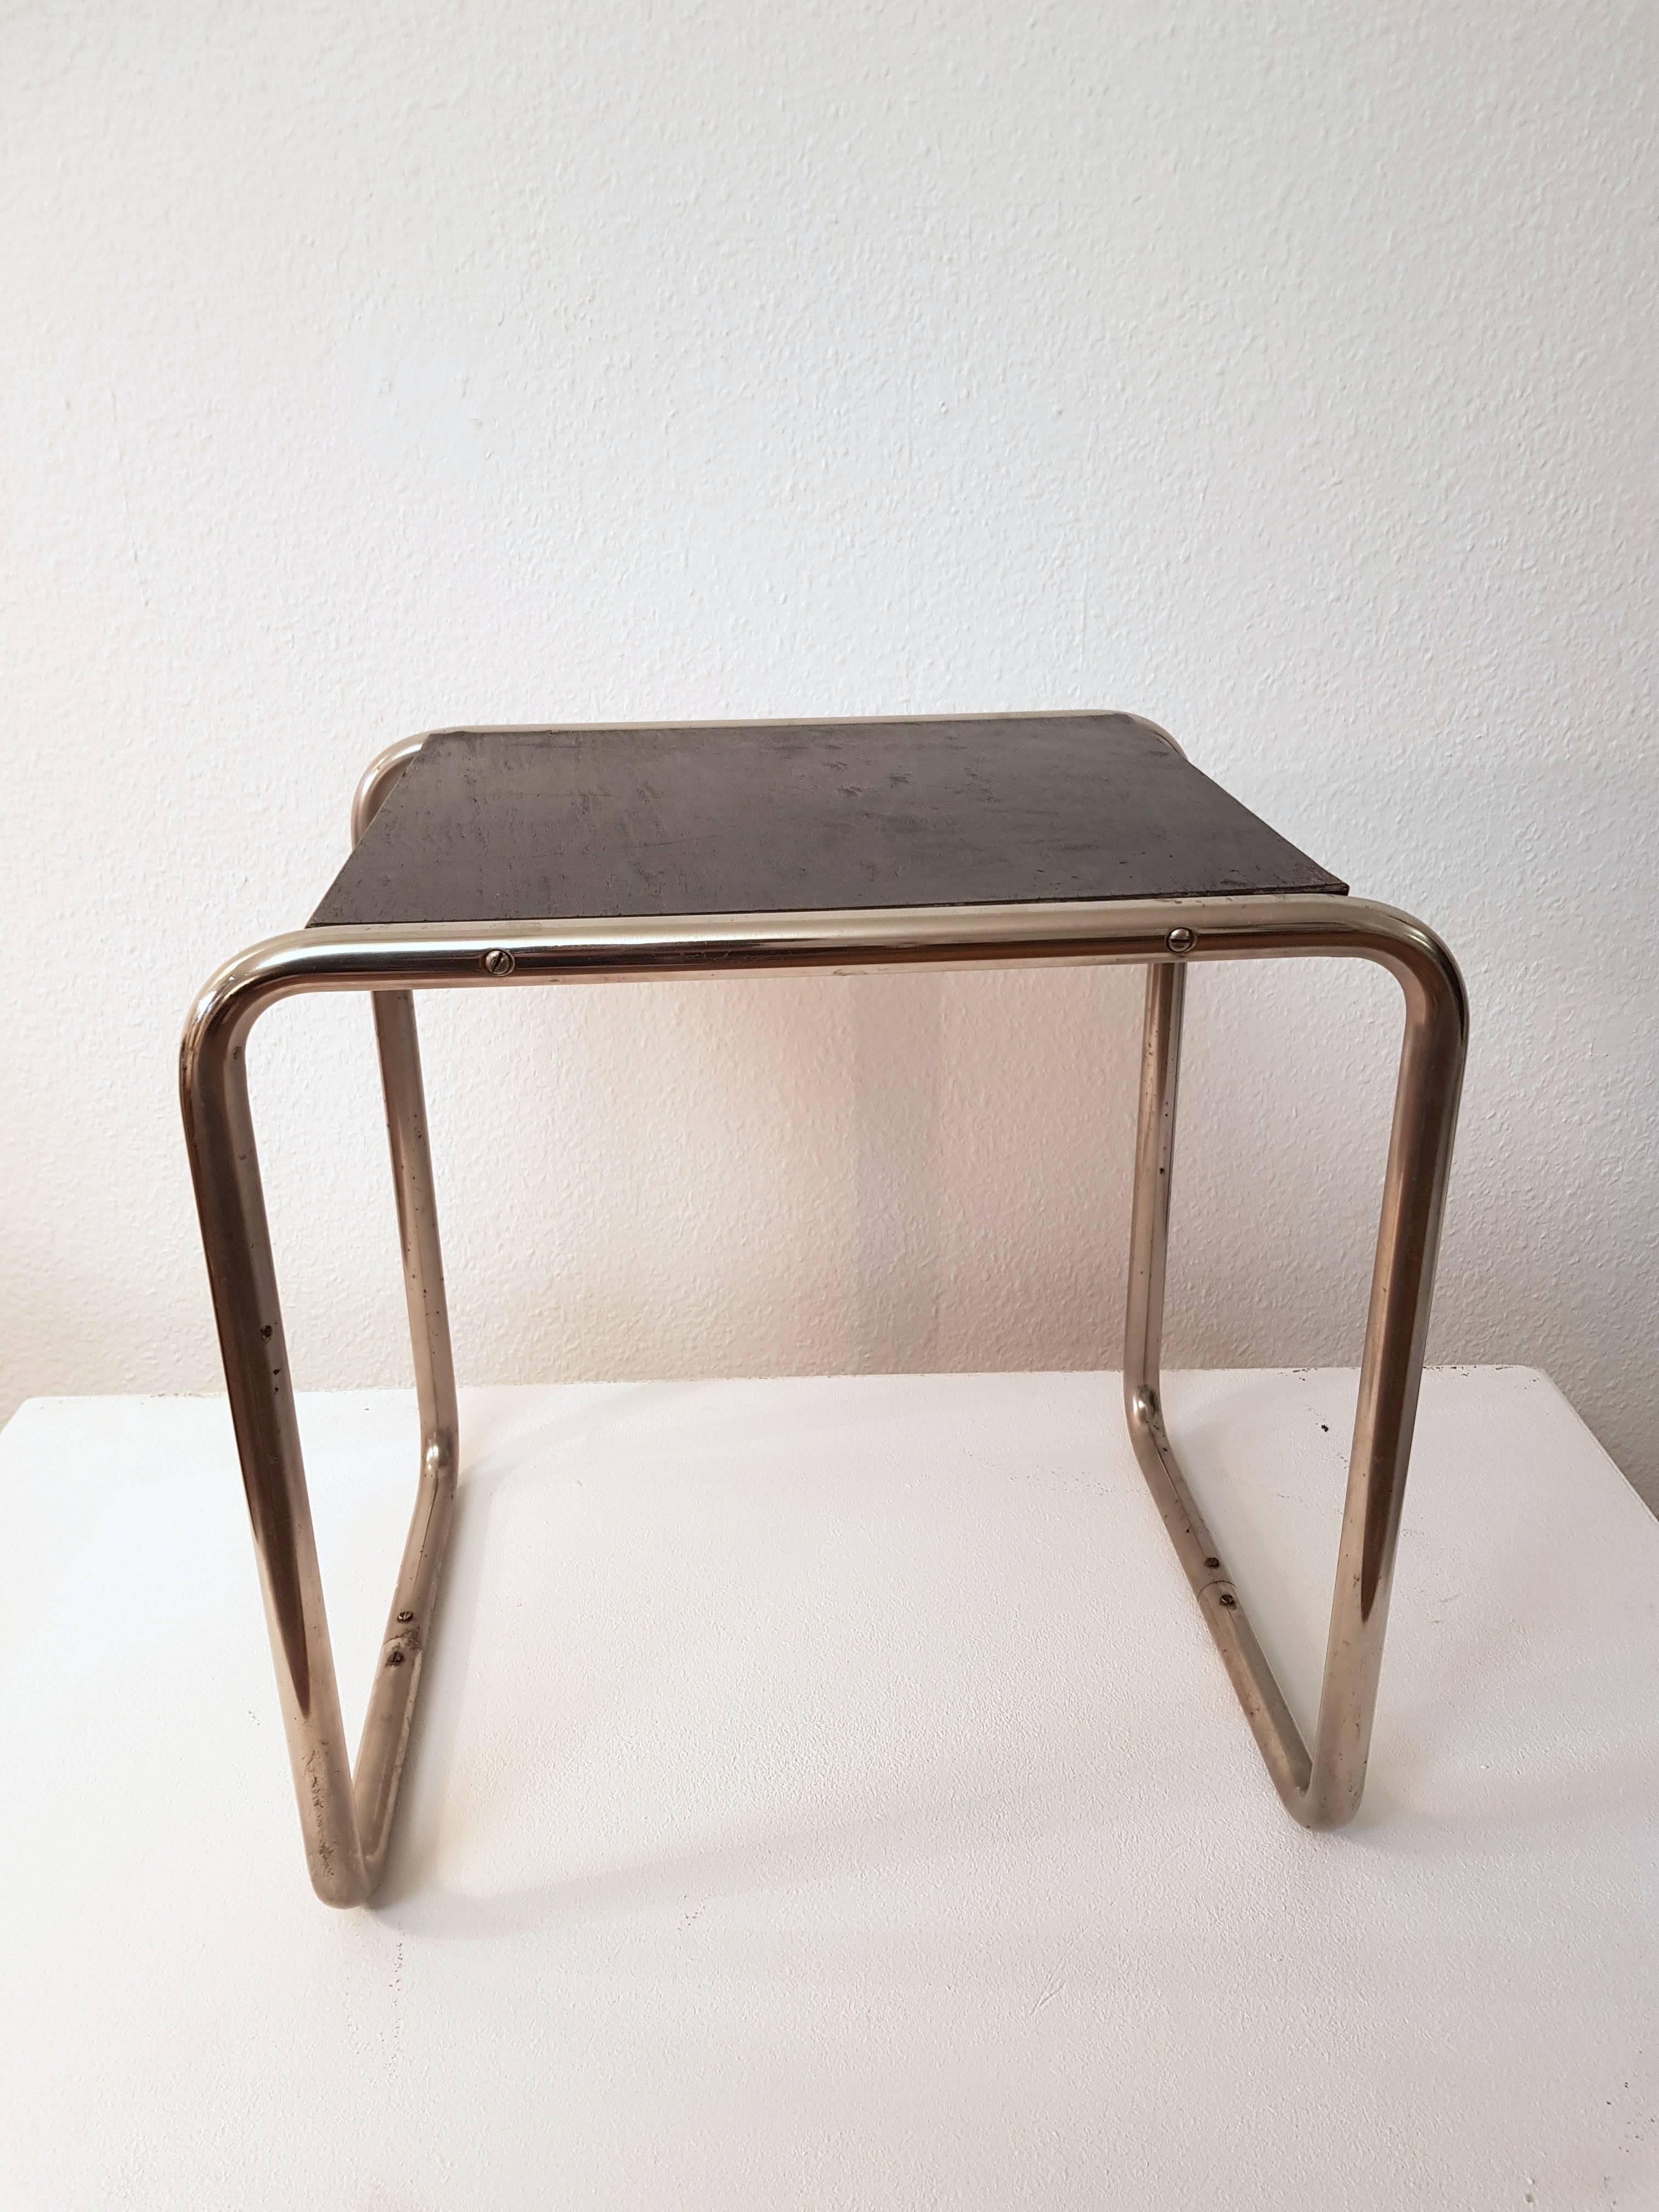 Very Early Marcel Breuer B9 Table, Standardmöbel GmbH Berlin, 1927, Bauhaus For Sale 3